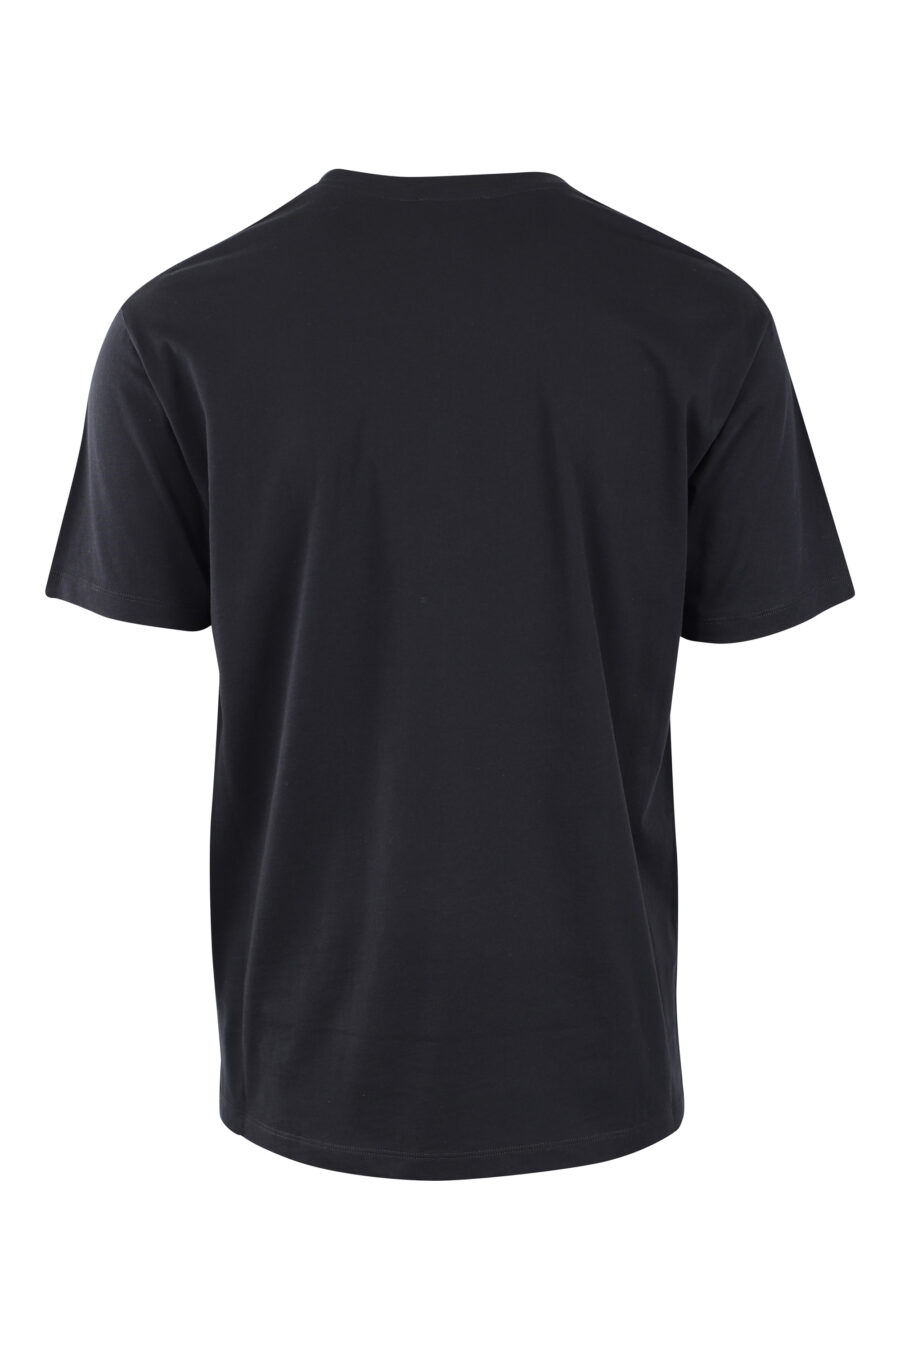 Camiseta negra con maxilogo blanco "paris" - IMG 2580